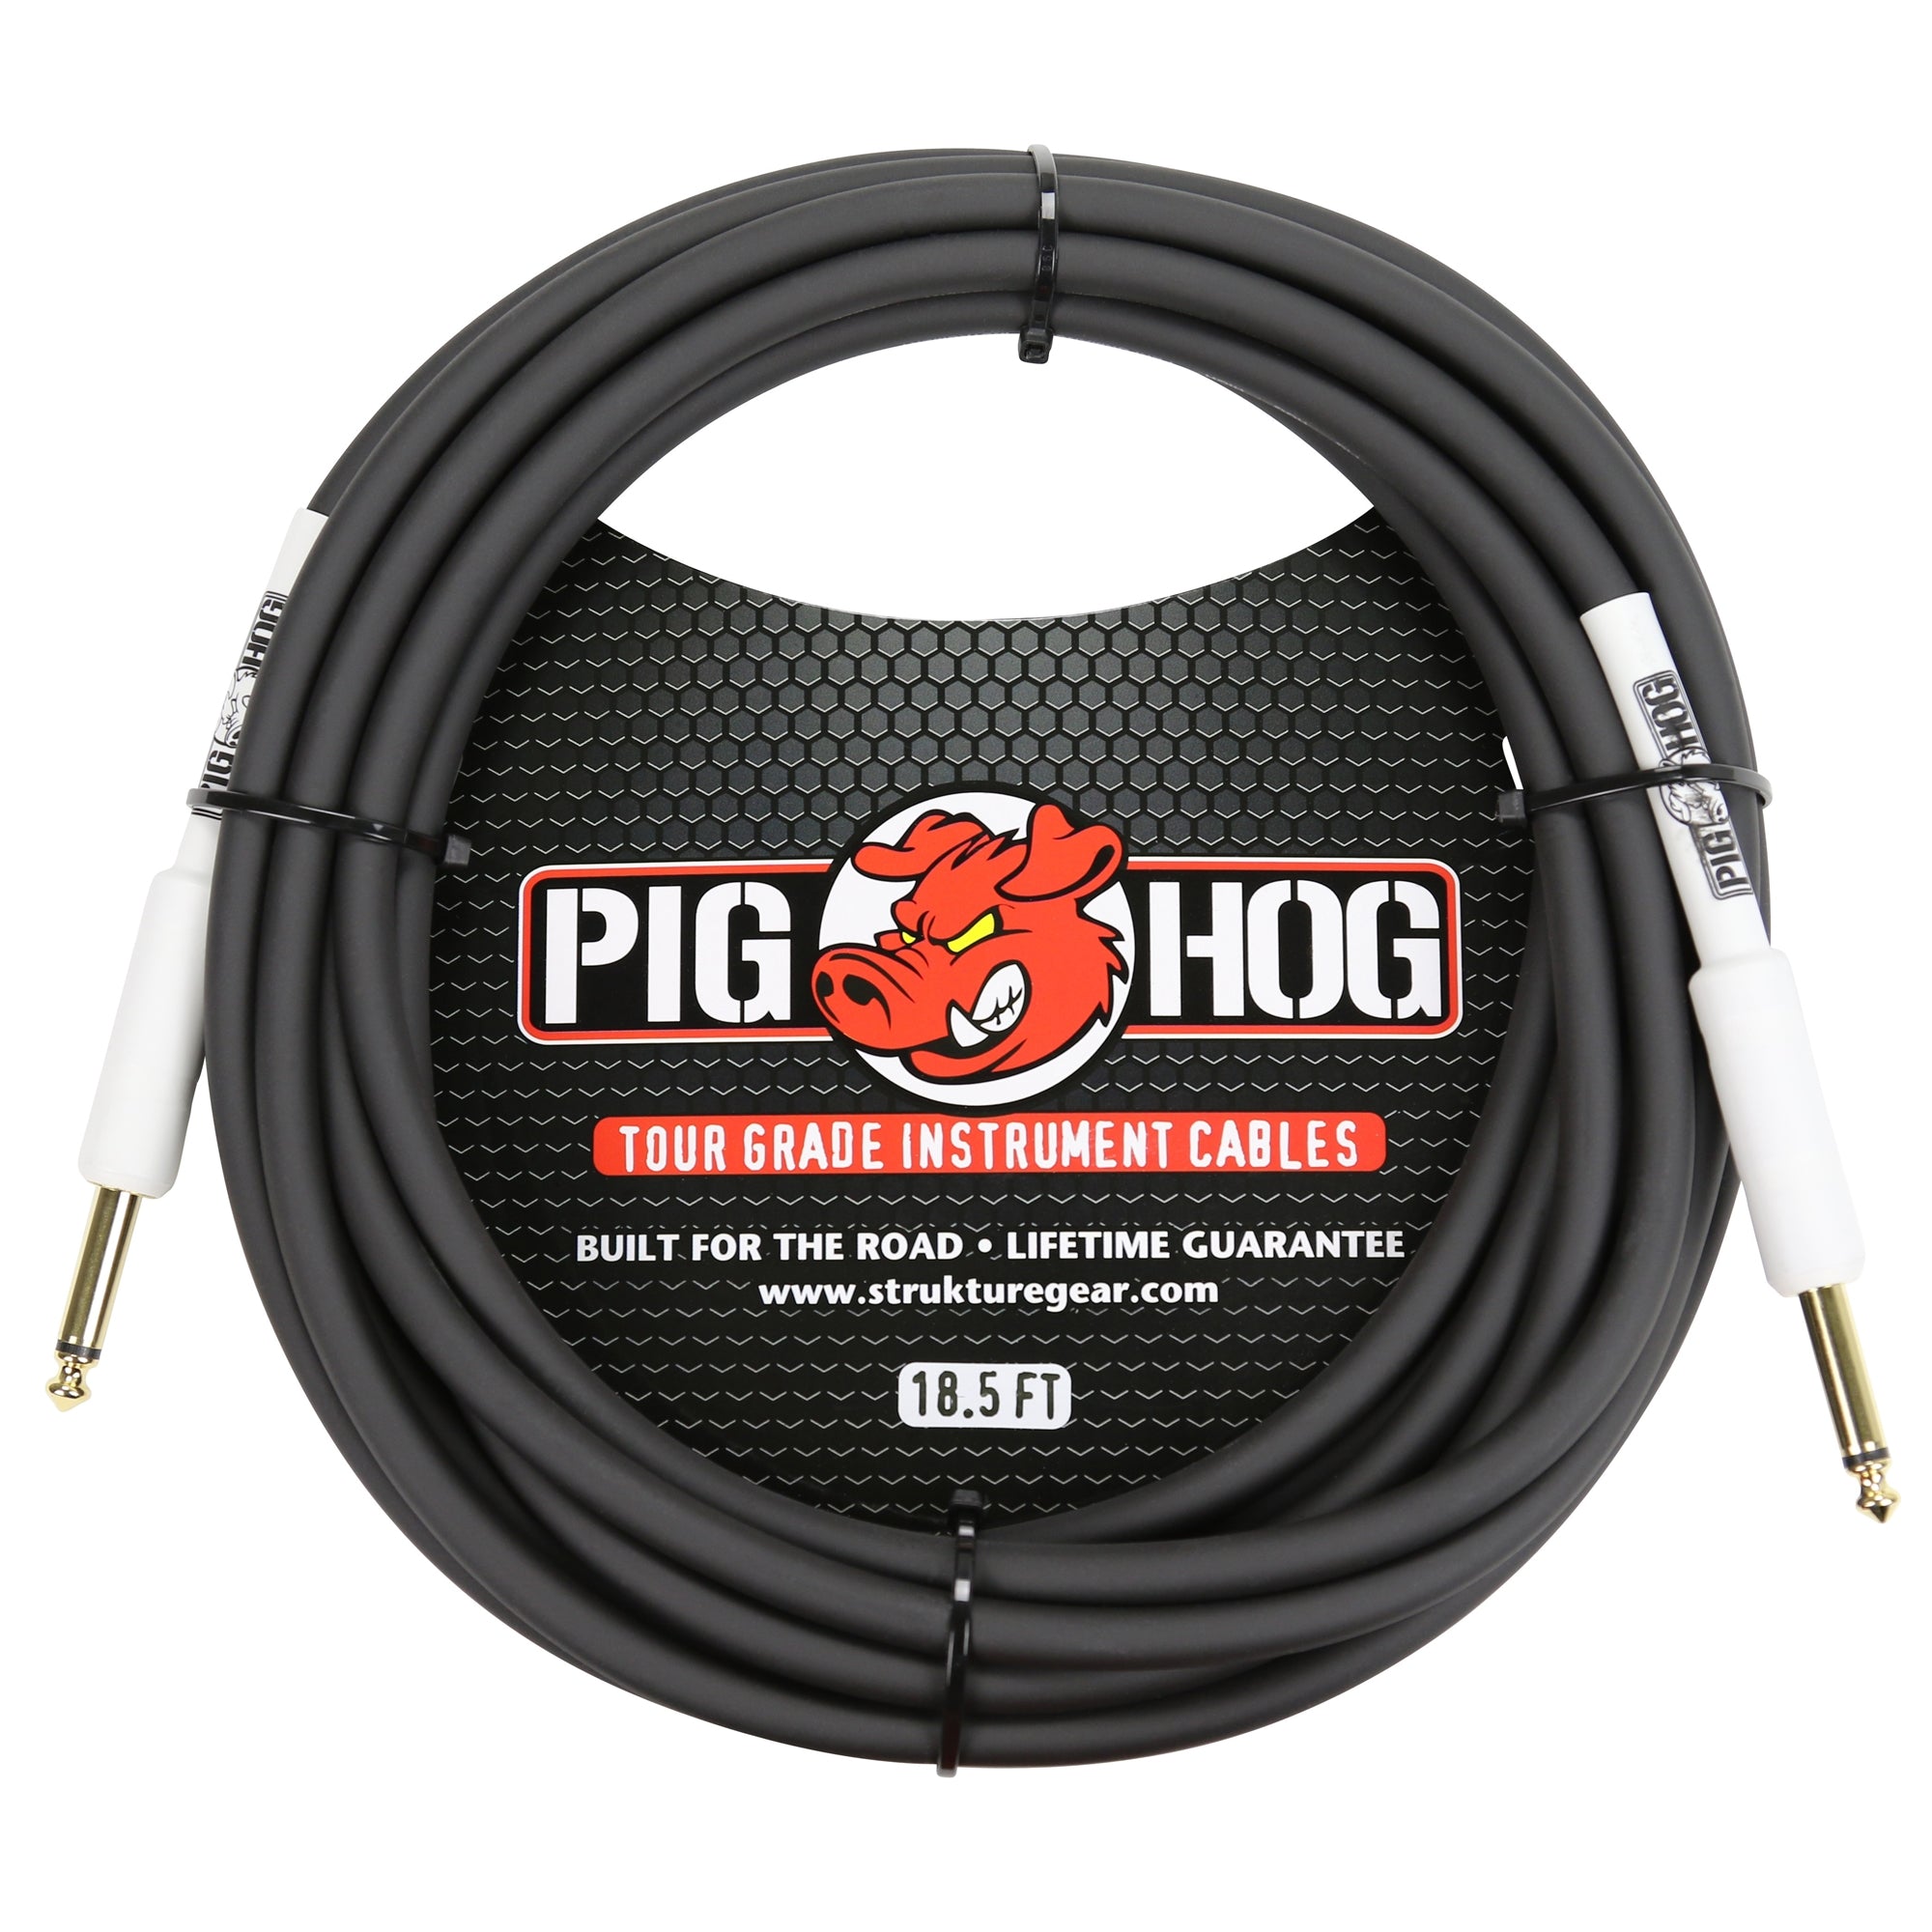 Pig Hog PH186 18.5' Instrument Cable 8mm